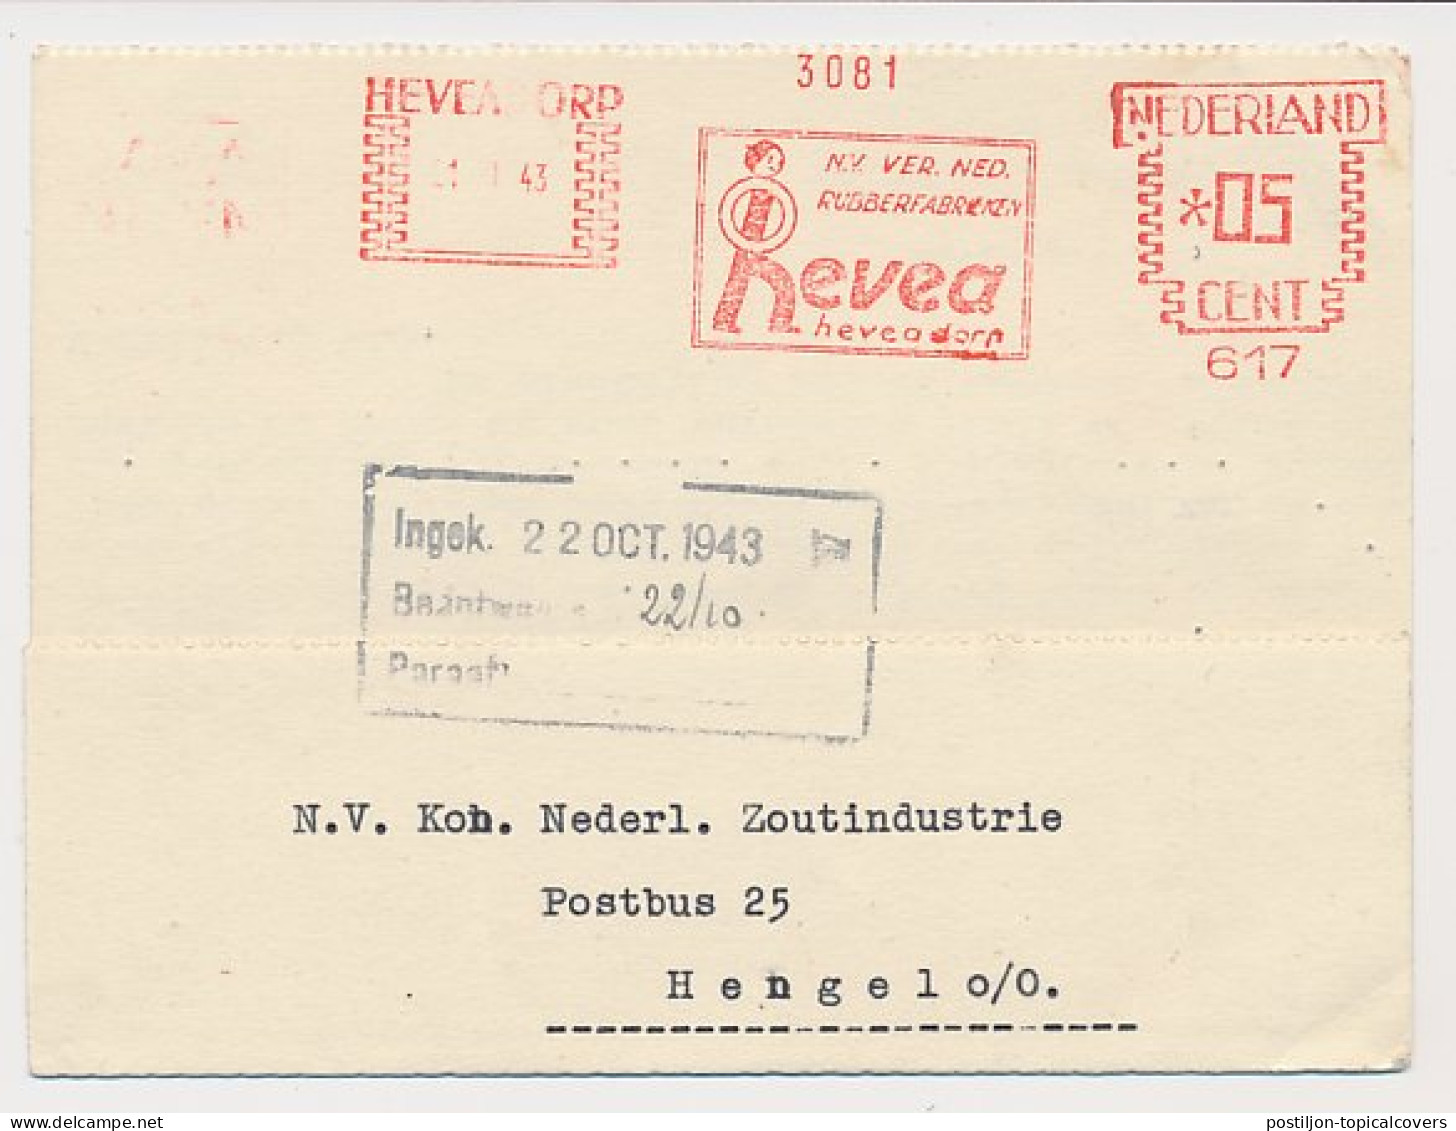 Meter Card Netherlands 1943 Rubber Factory - Heveadorp - Alberi